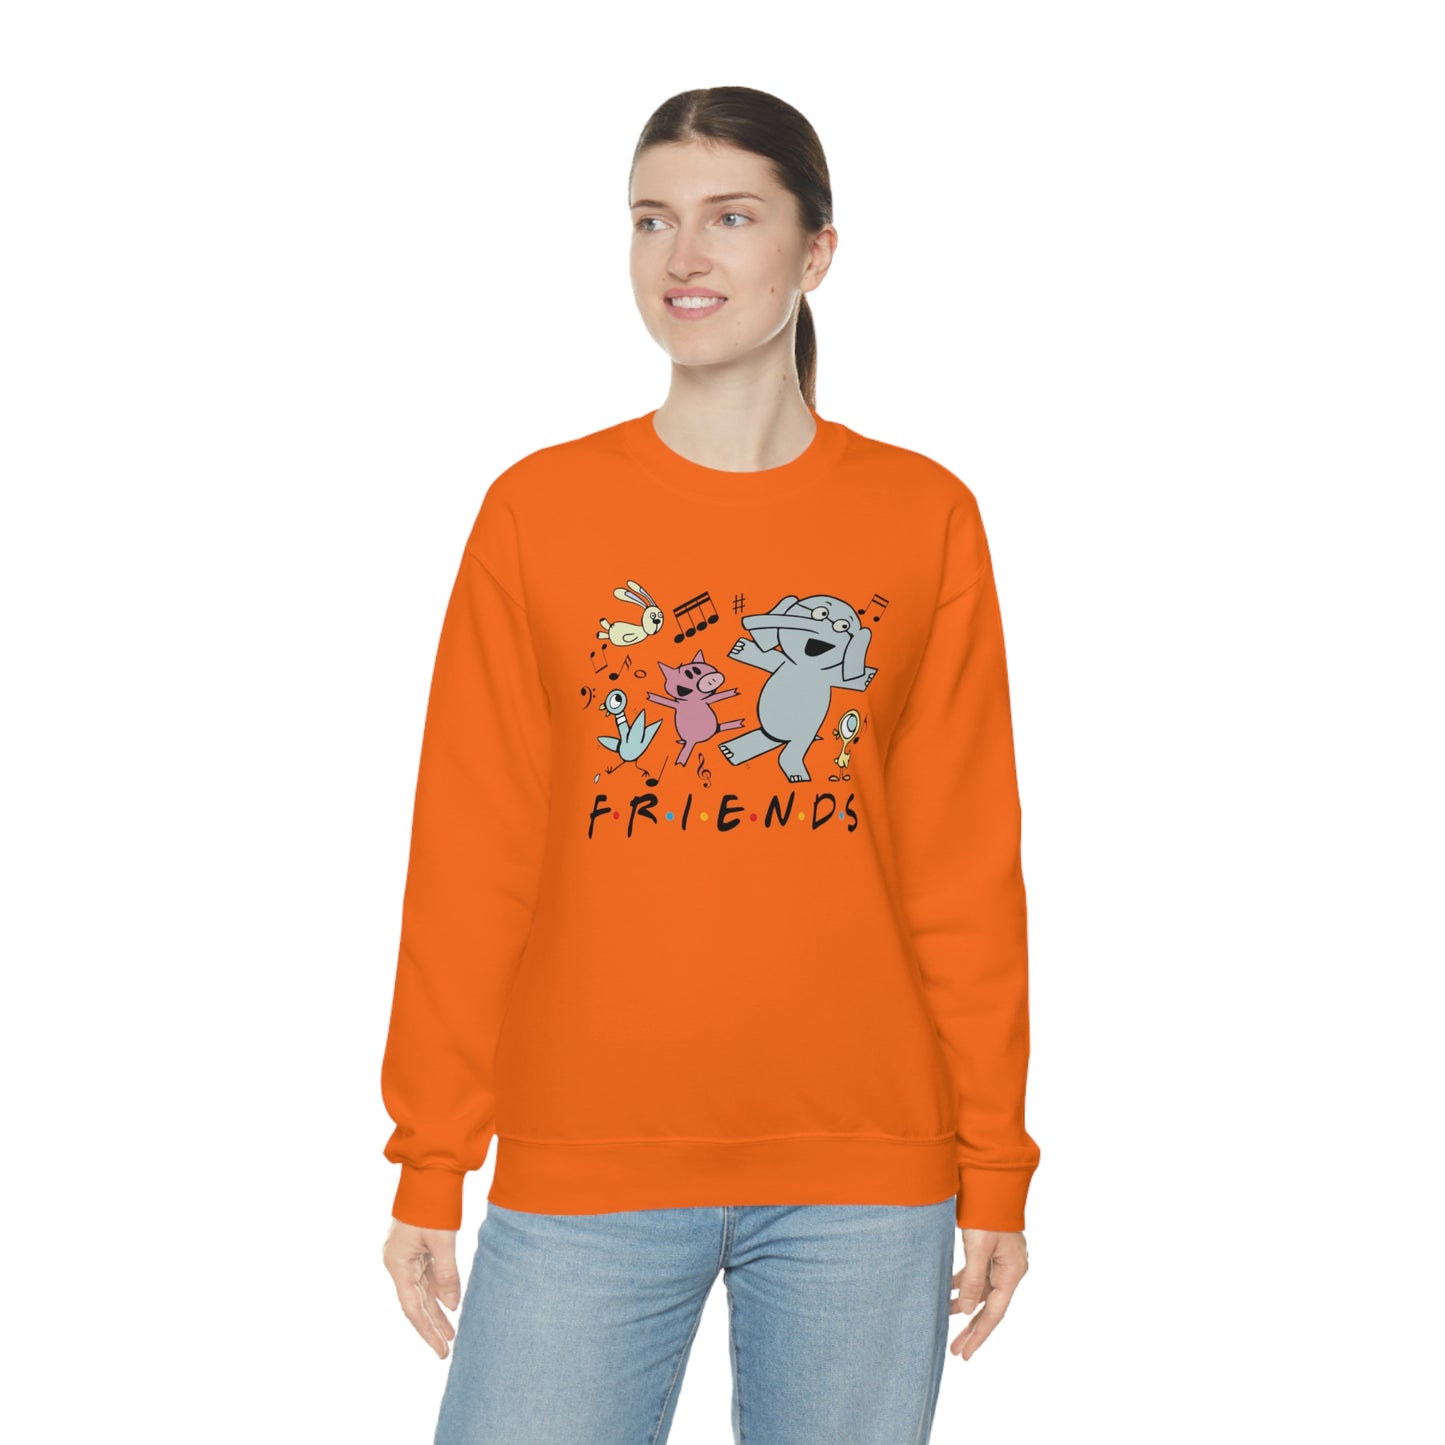 FRIENDS - Pig and Elephant Sweatshirt